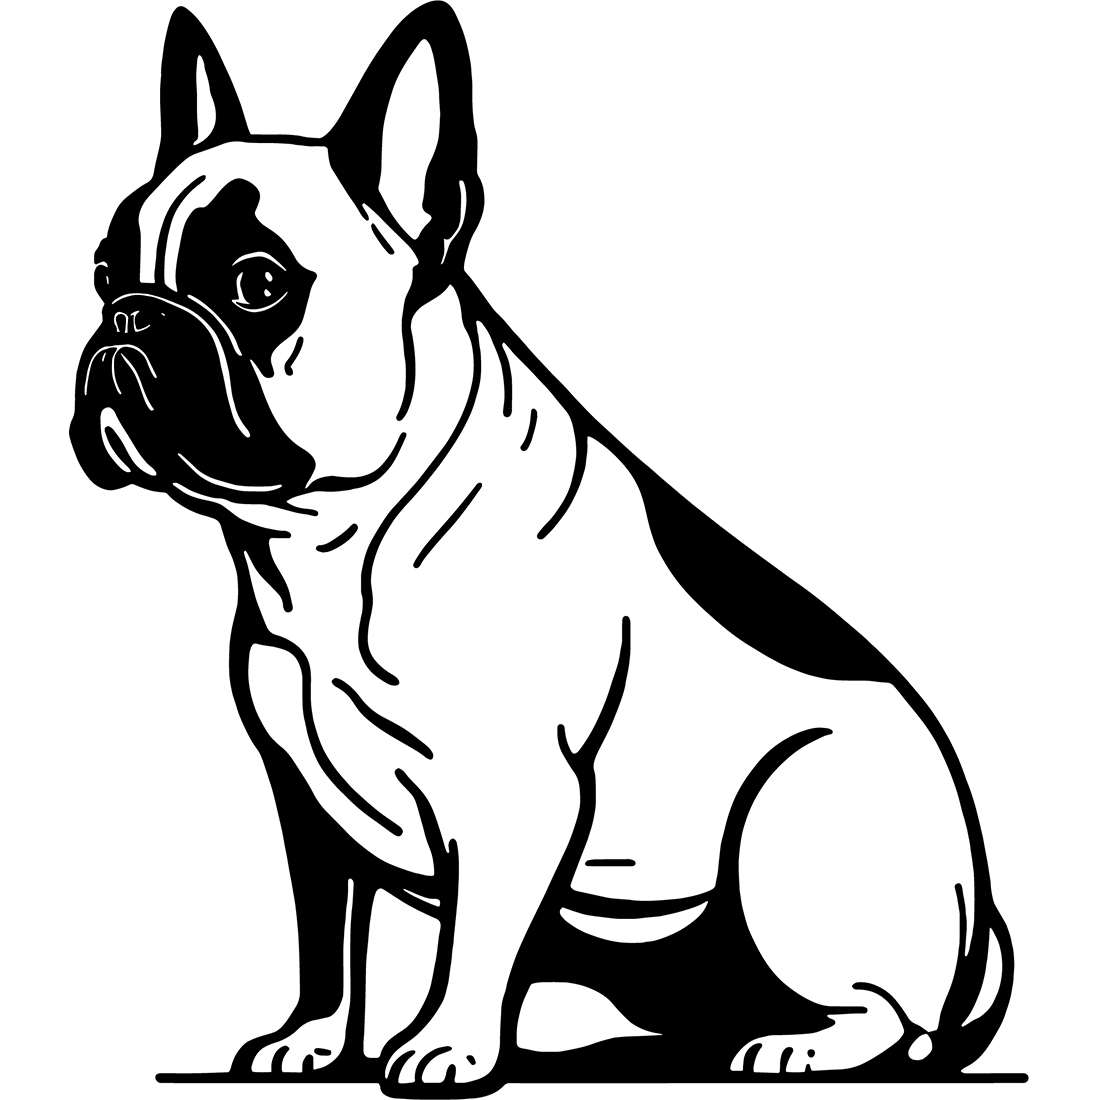 French bulldog Logo Illustration cover image.